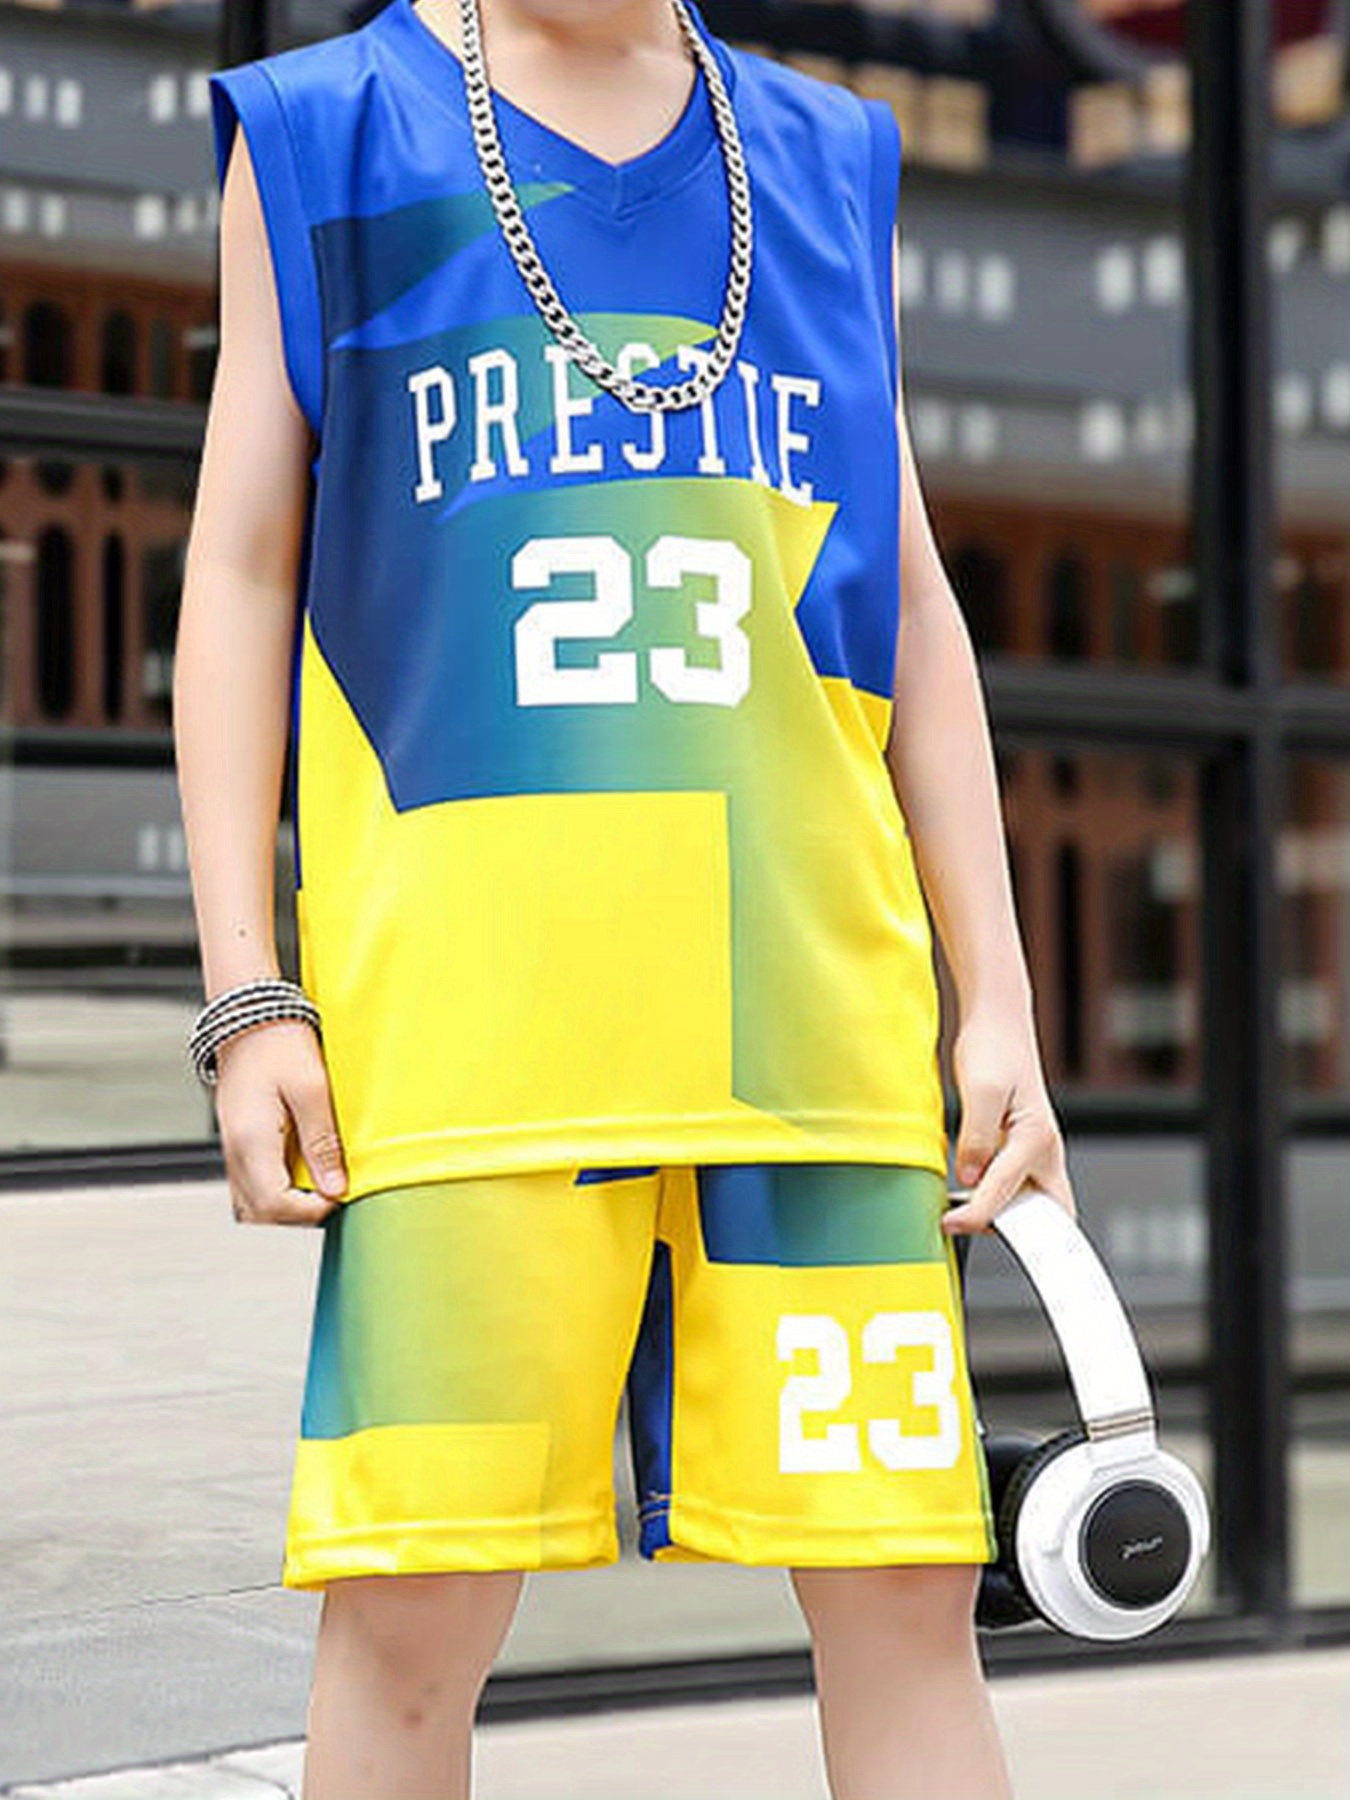 Customized Basketball Tank Top YOUTH Basketball Jersey 